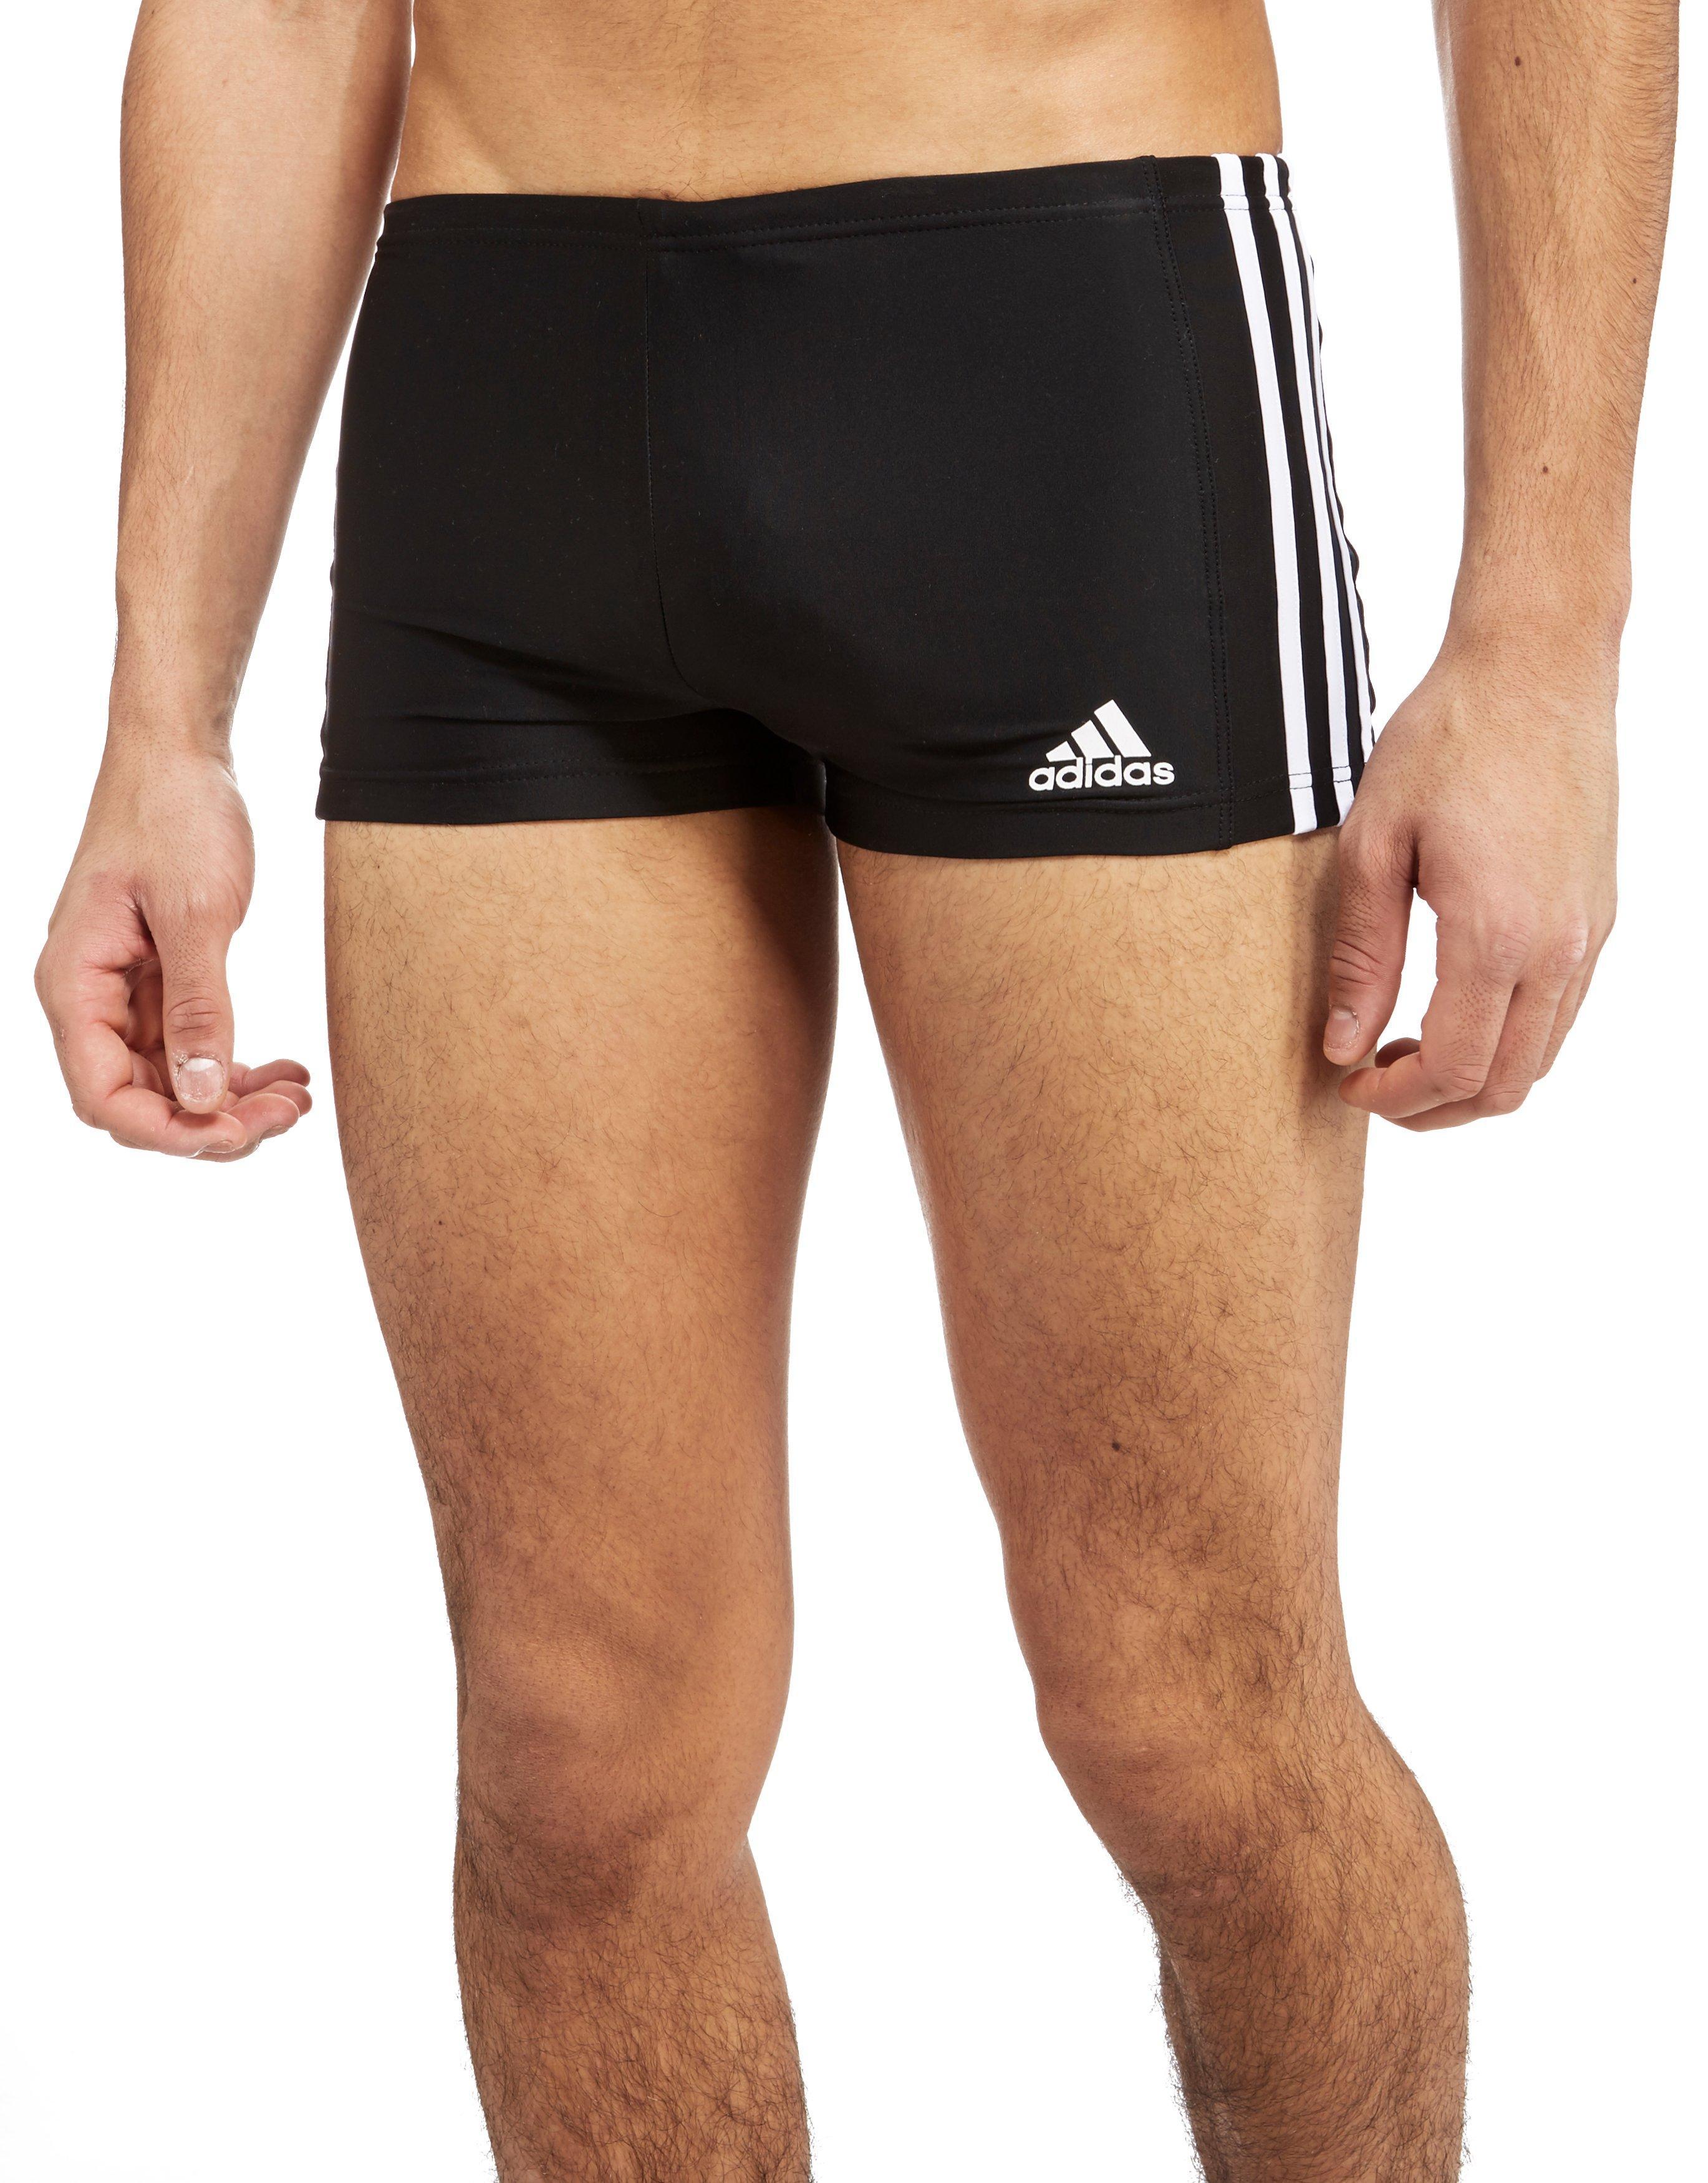 adidas Synthetic Aqua Swim Shorts in Black/White (Black) for Men - Lyst